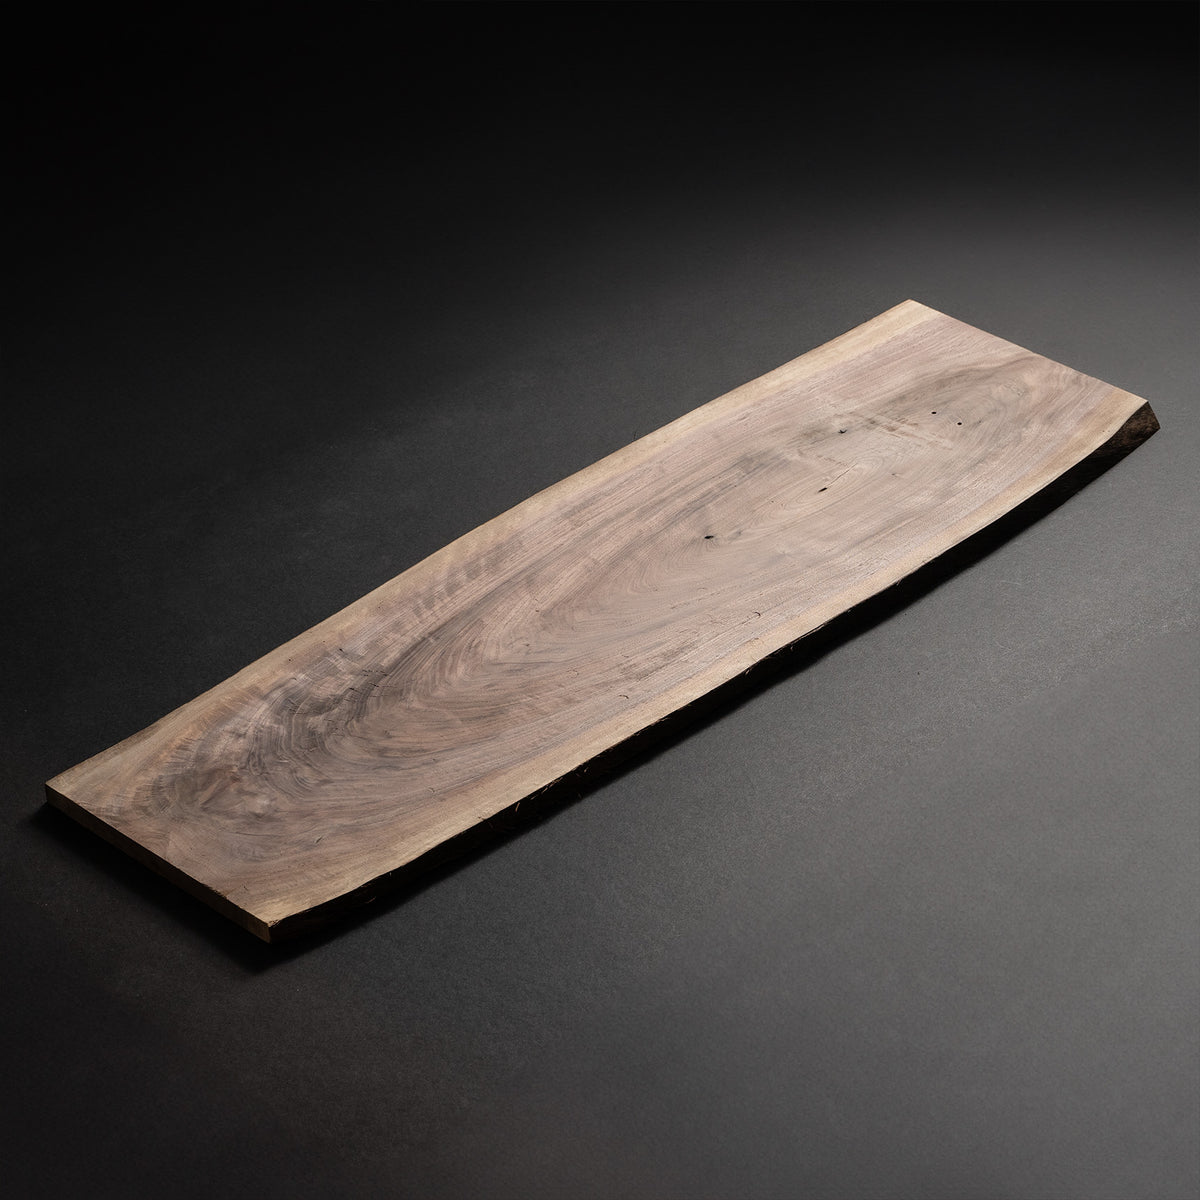 4/4 1” Live Edge Black Walnut Boards Wood - Kiln Dried Dimensional Lumber - Cut to Size - DIY Project wood board - Floating Shelf Boards